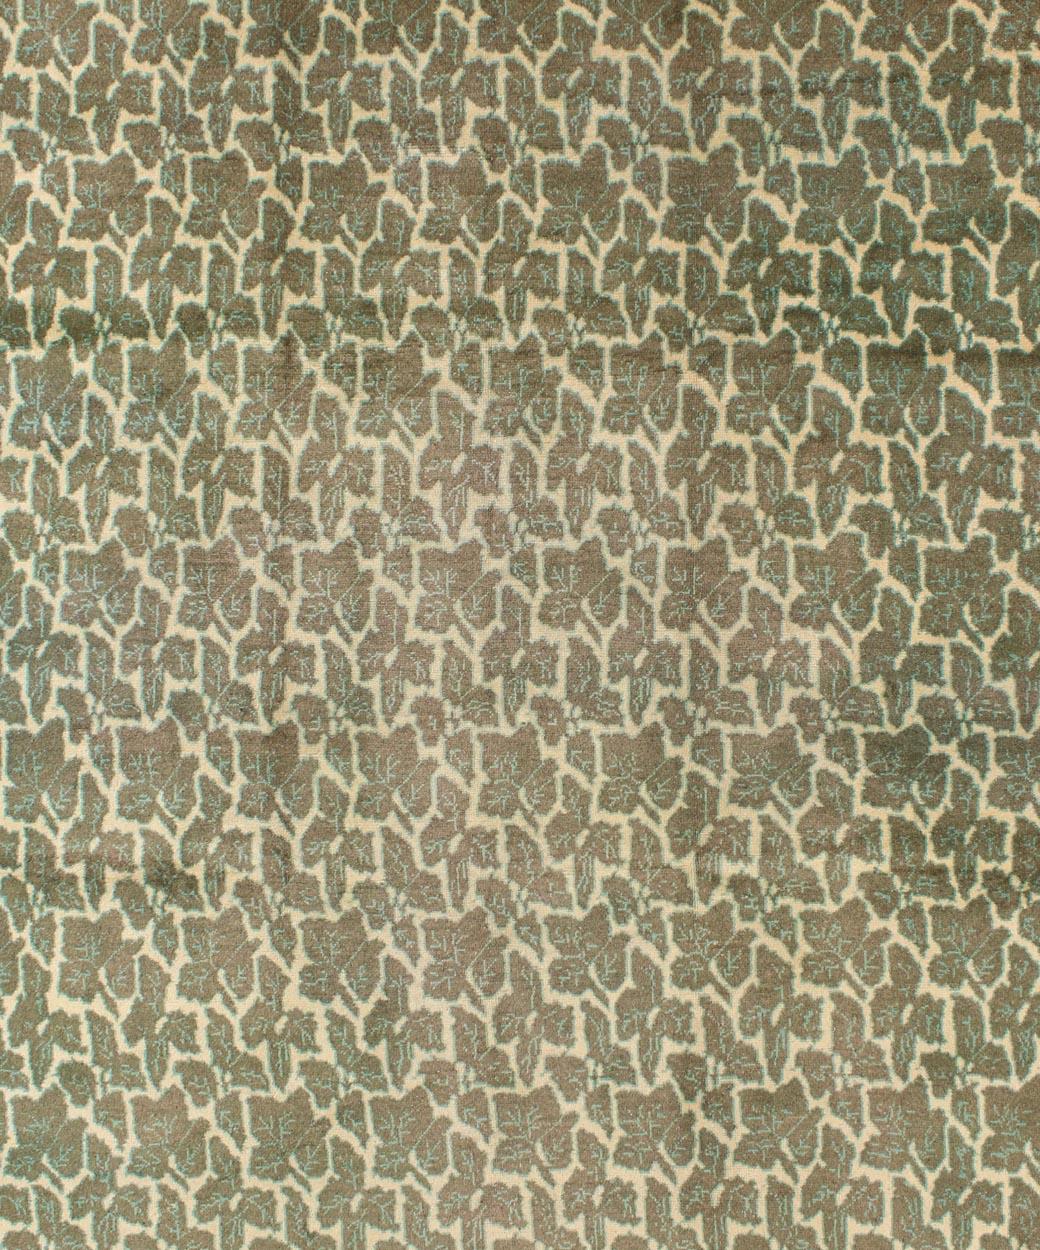 leaf patterned rugs